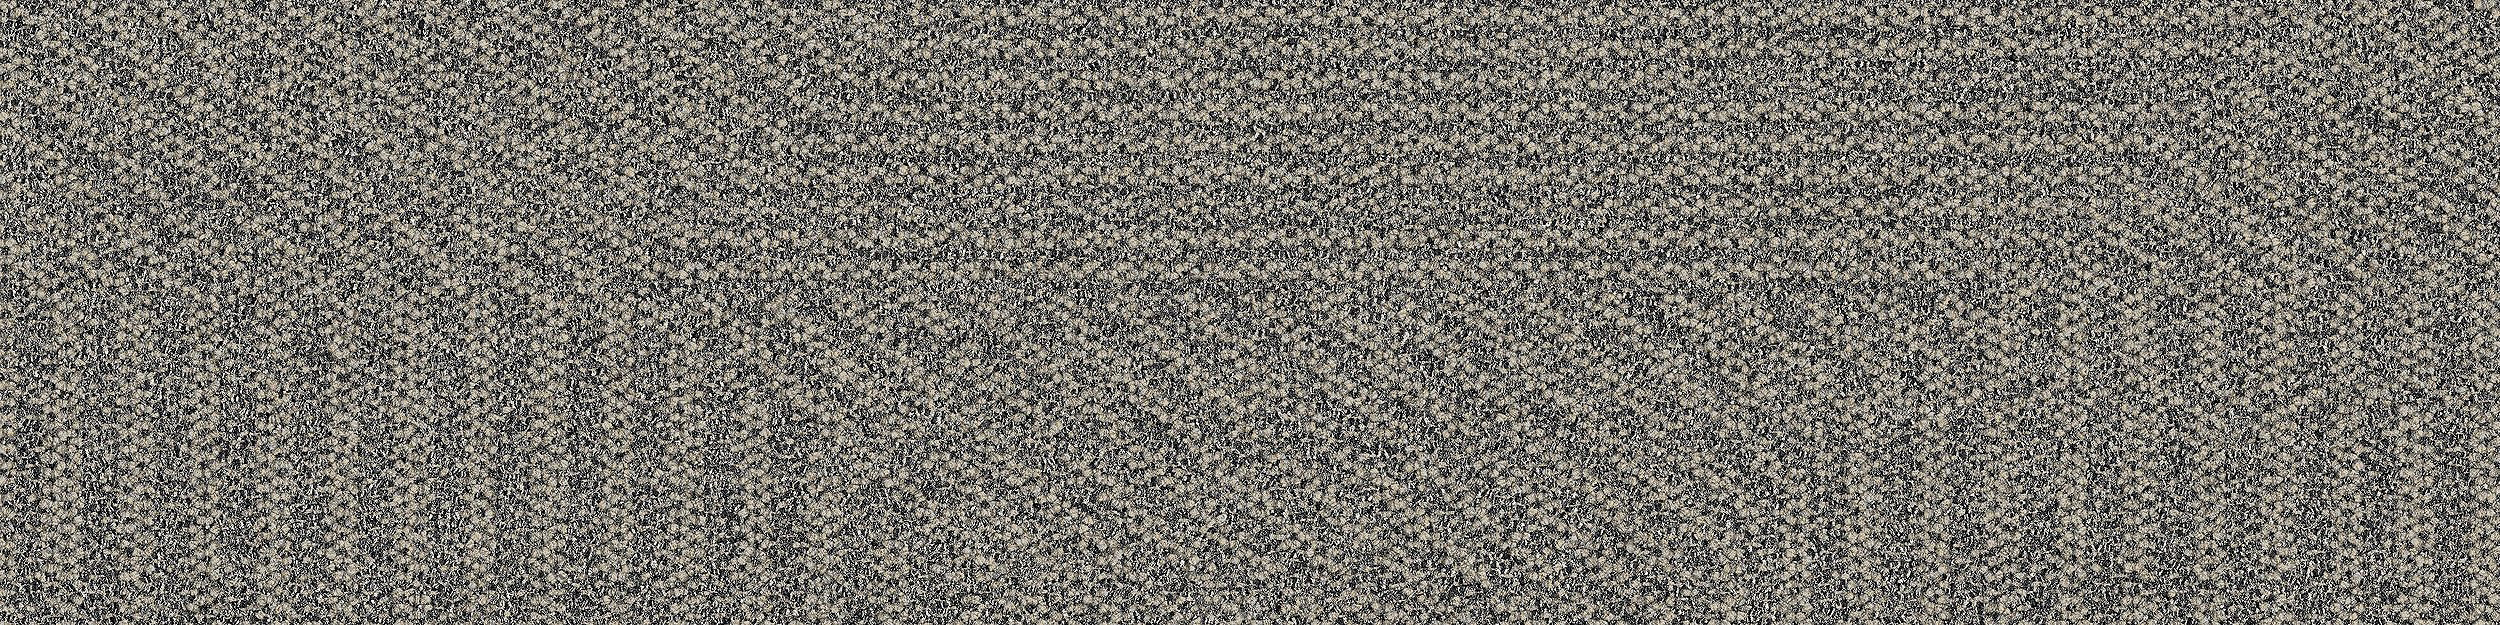 Open Air 407 Carpet Tile In Natural image number 6